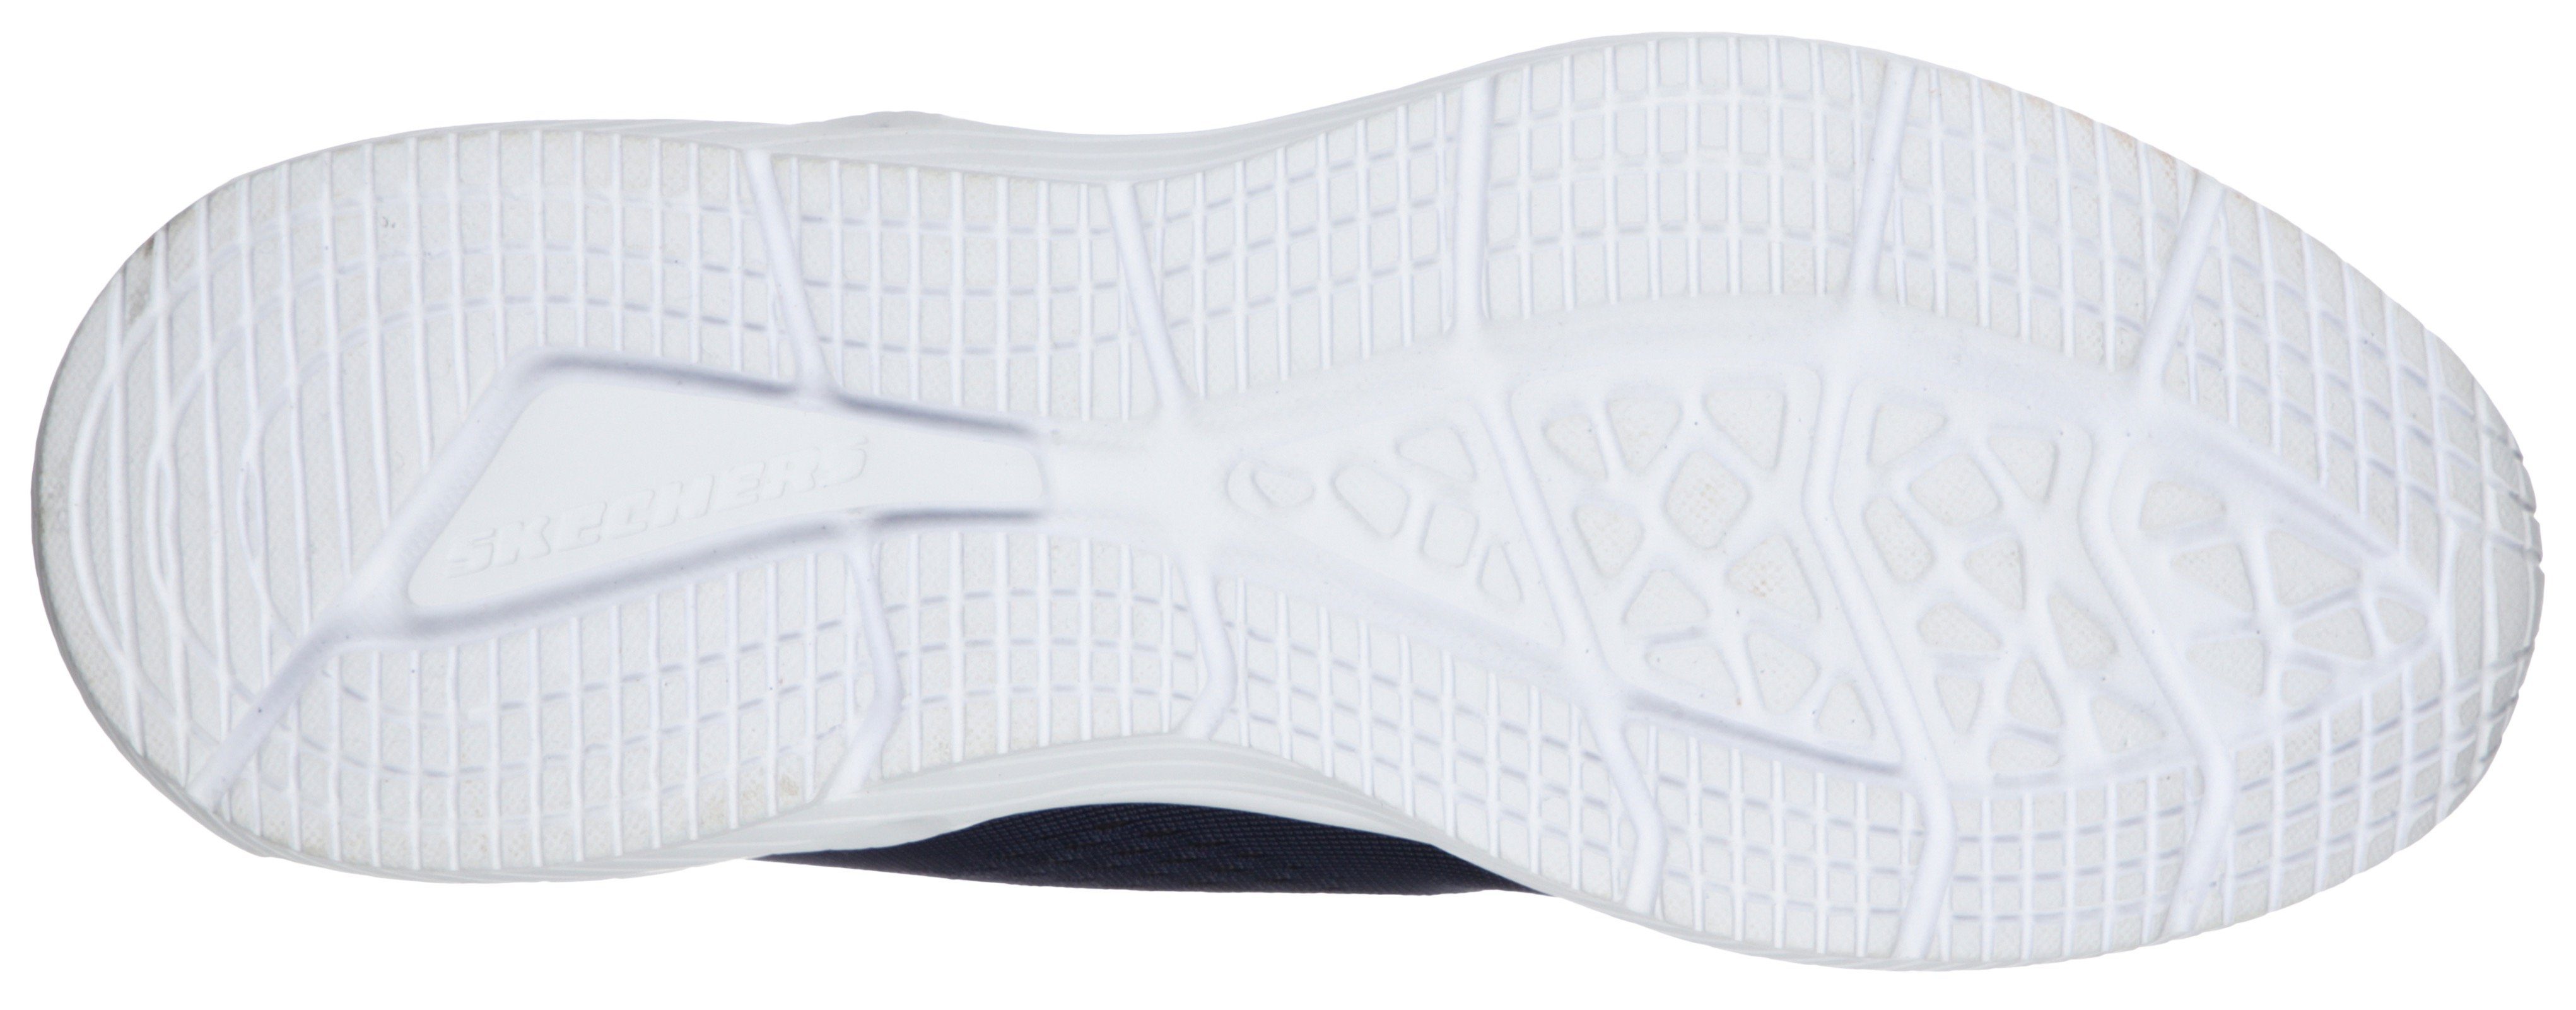 Air-Cooled Foam Skechers Air navy Sneaker Memory mit Dyna